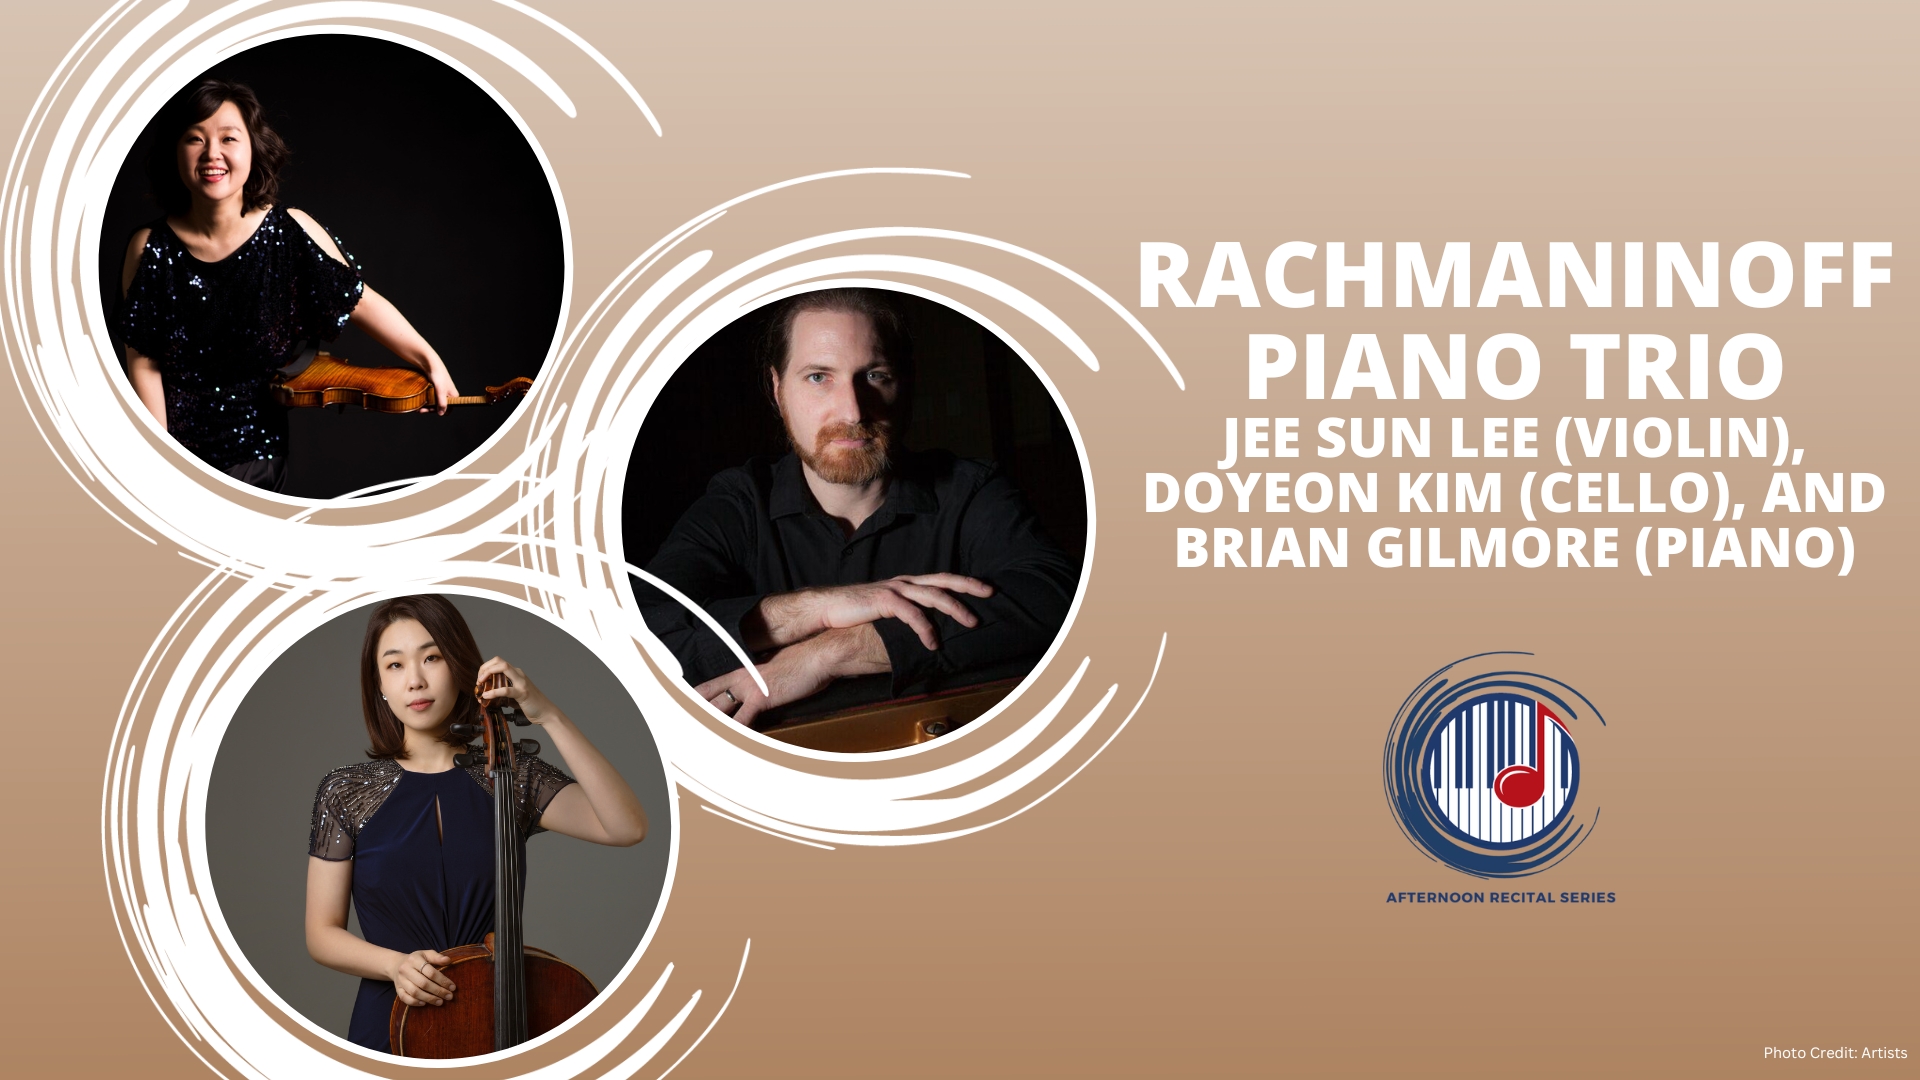 Rachmaninoff Trio artists in Grunin Center logos